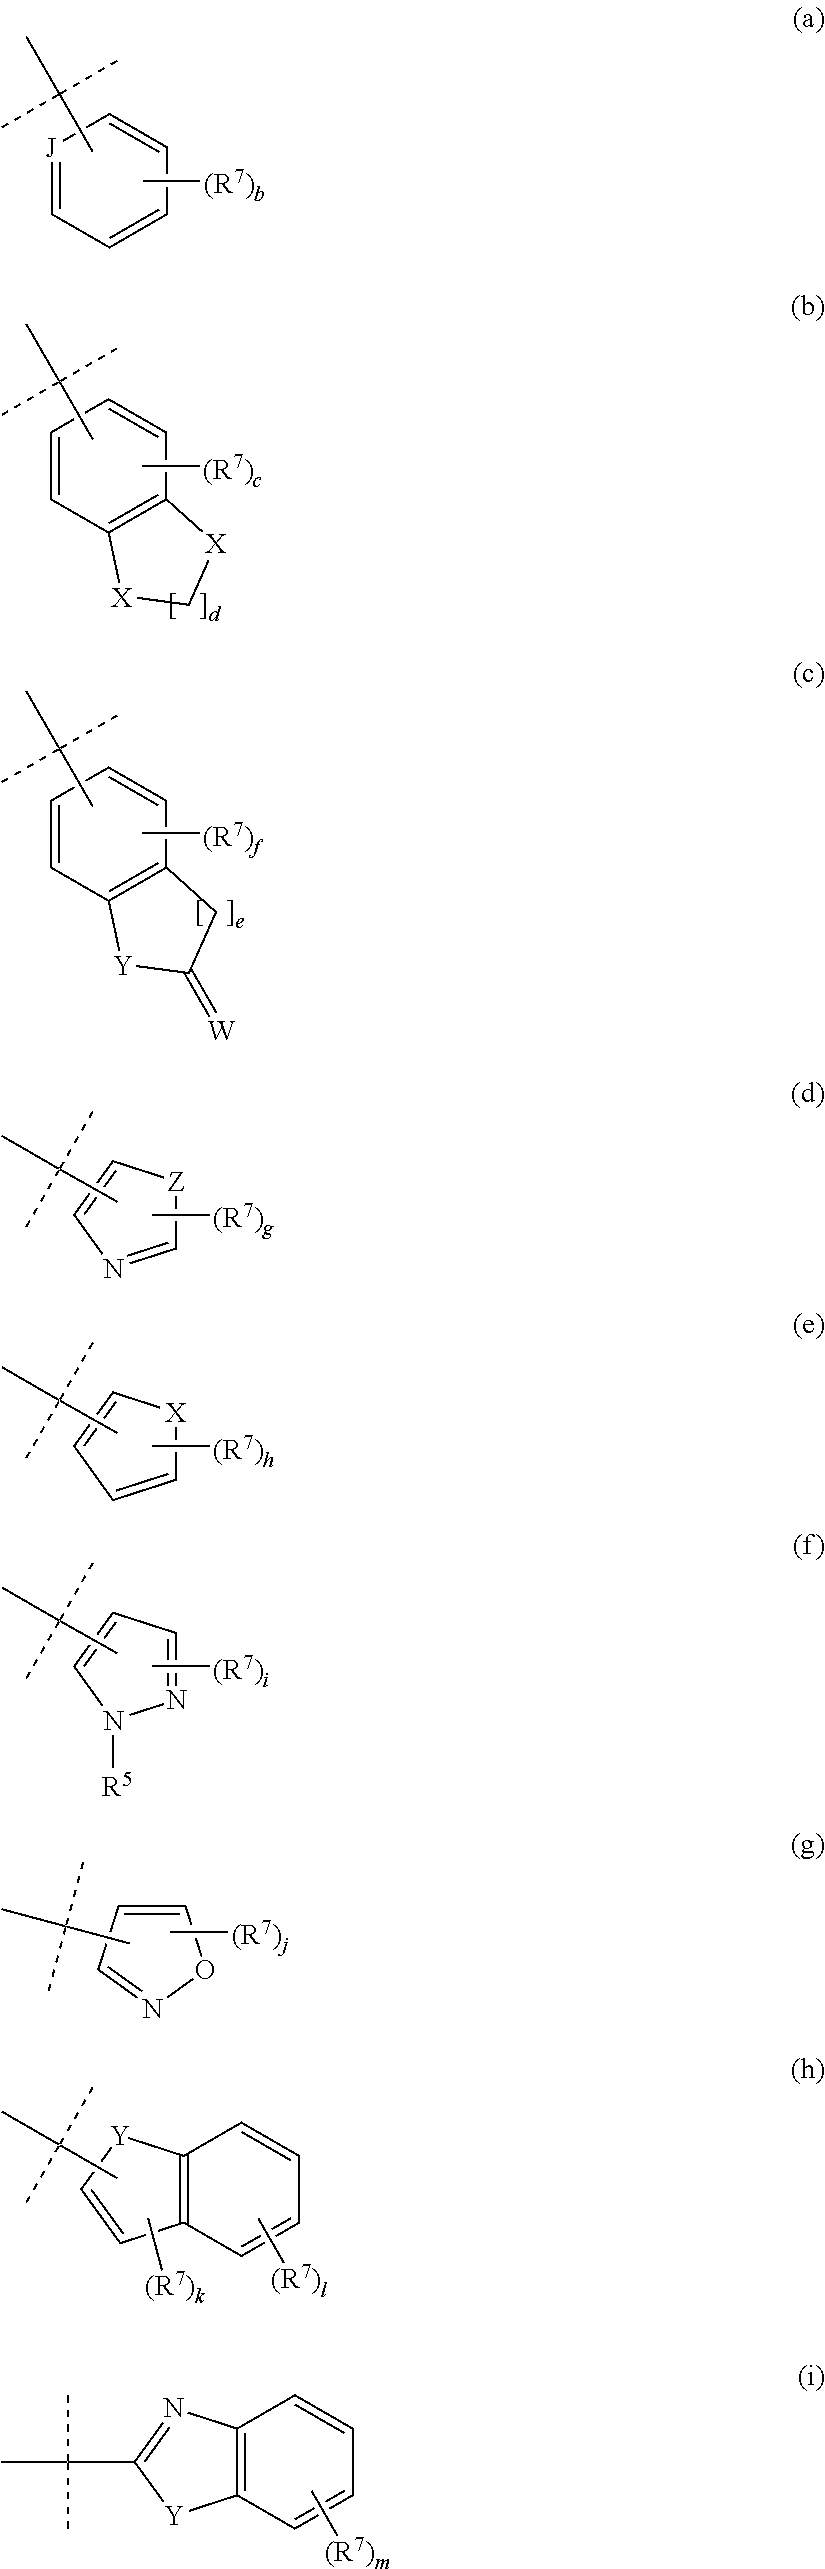 Pyrrolidine-substituted azaindole compounds having 5-ht6 receptor affinity